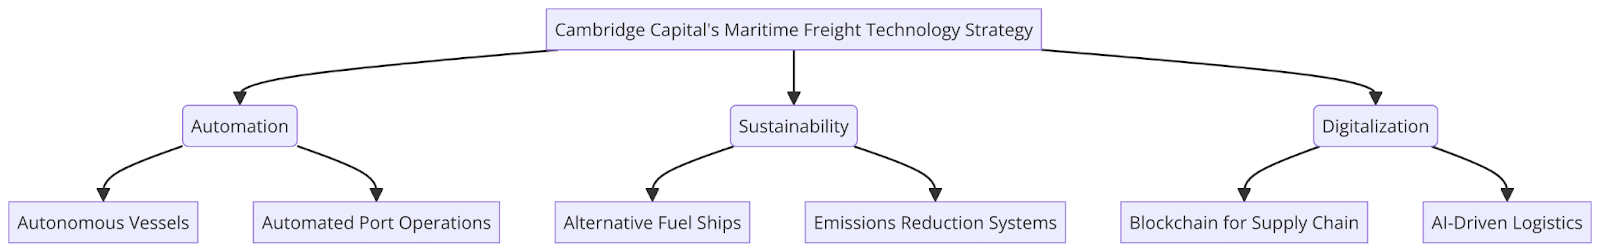 Cambridge Capital's Maritime Freight Technology Strategy